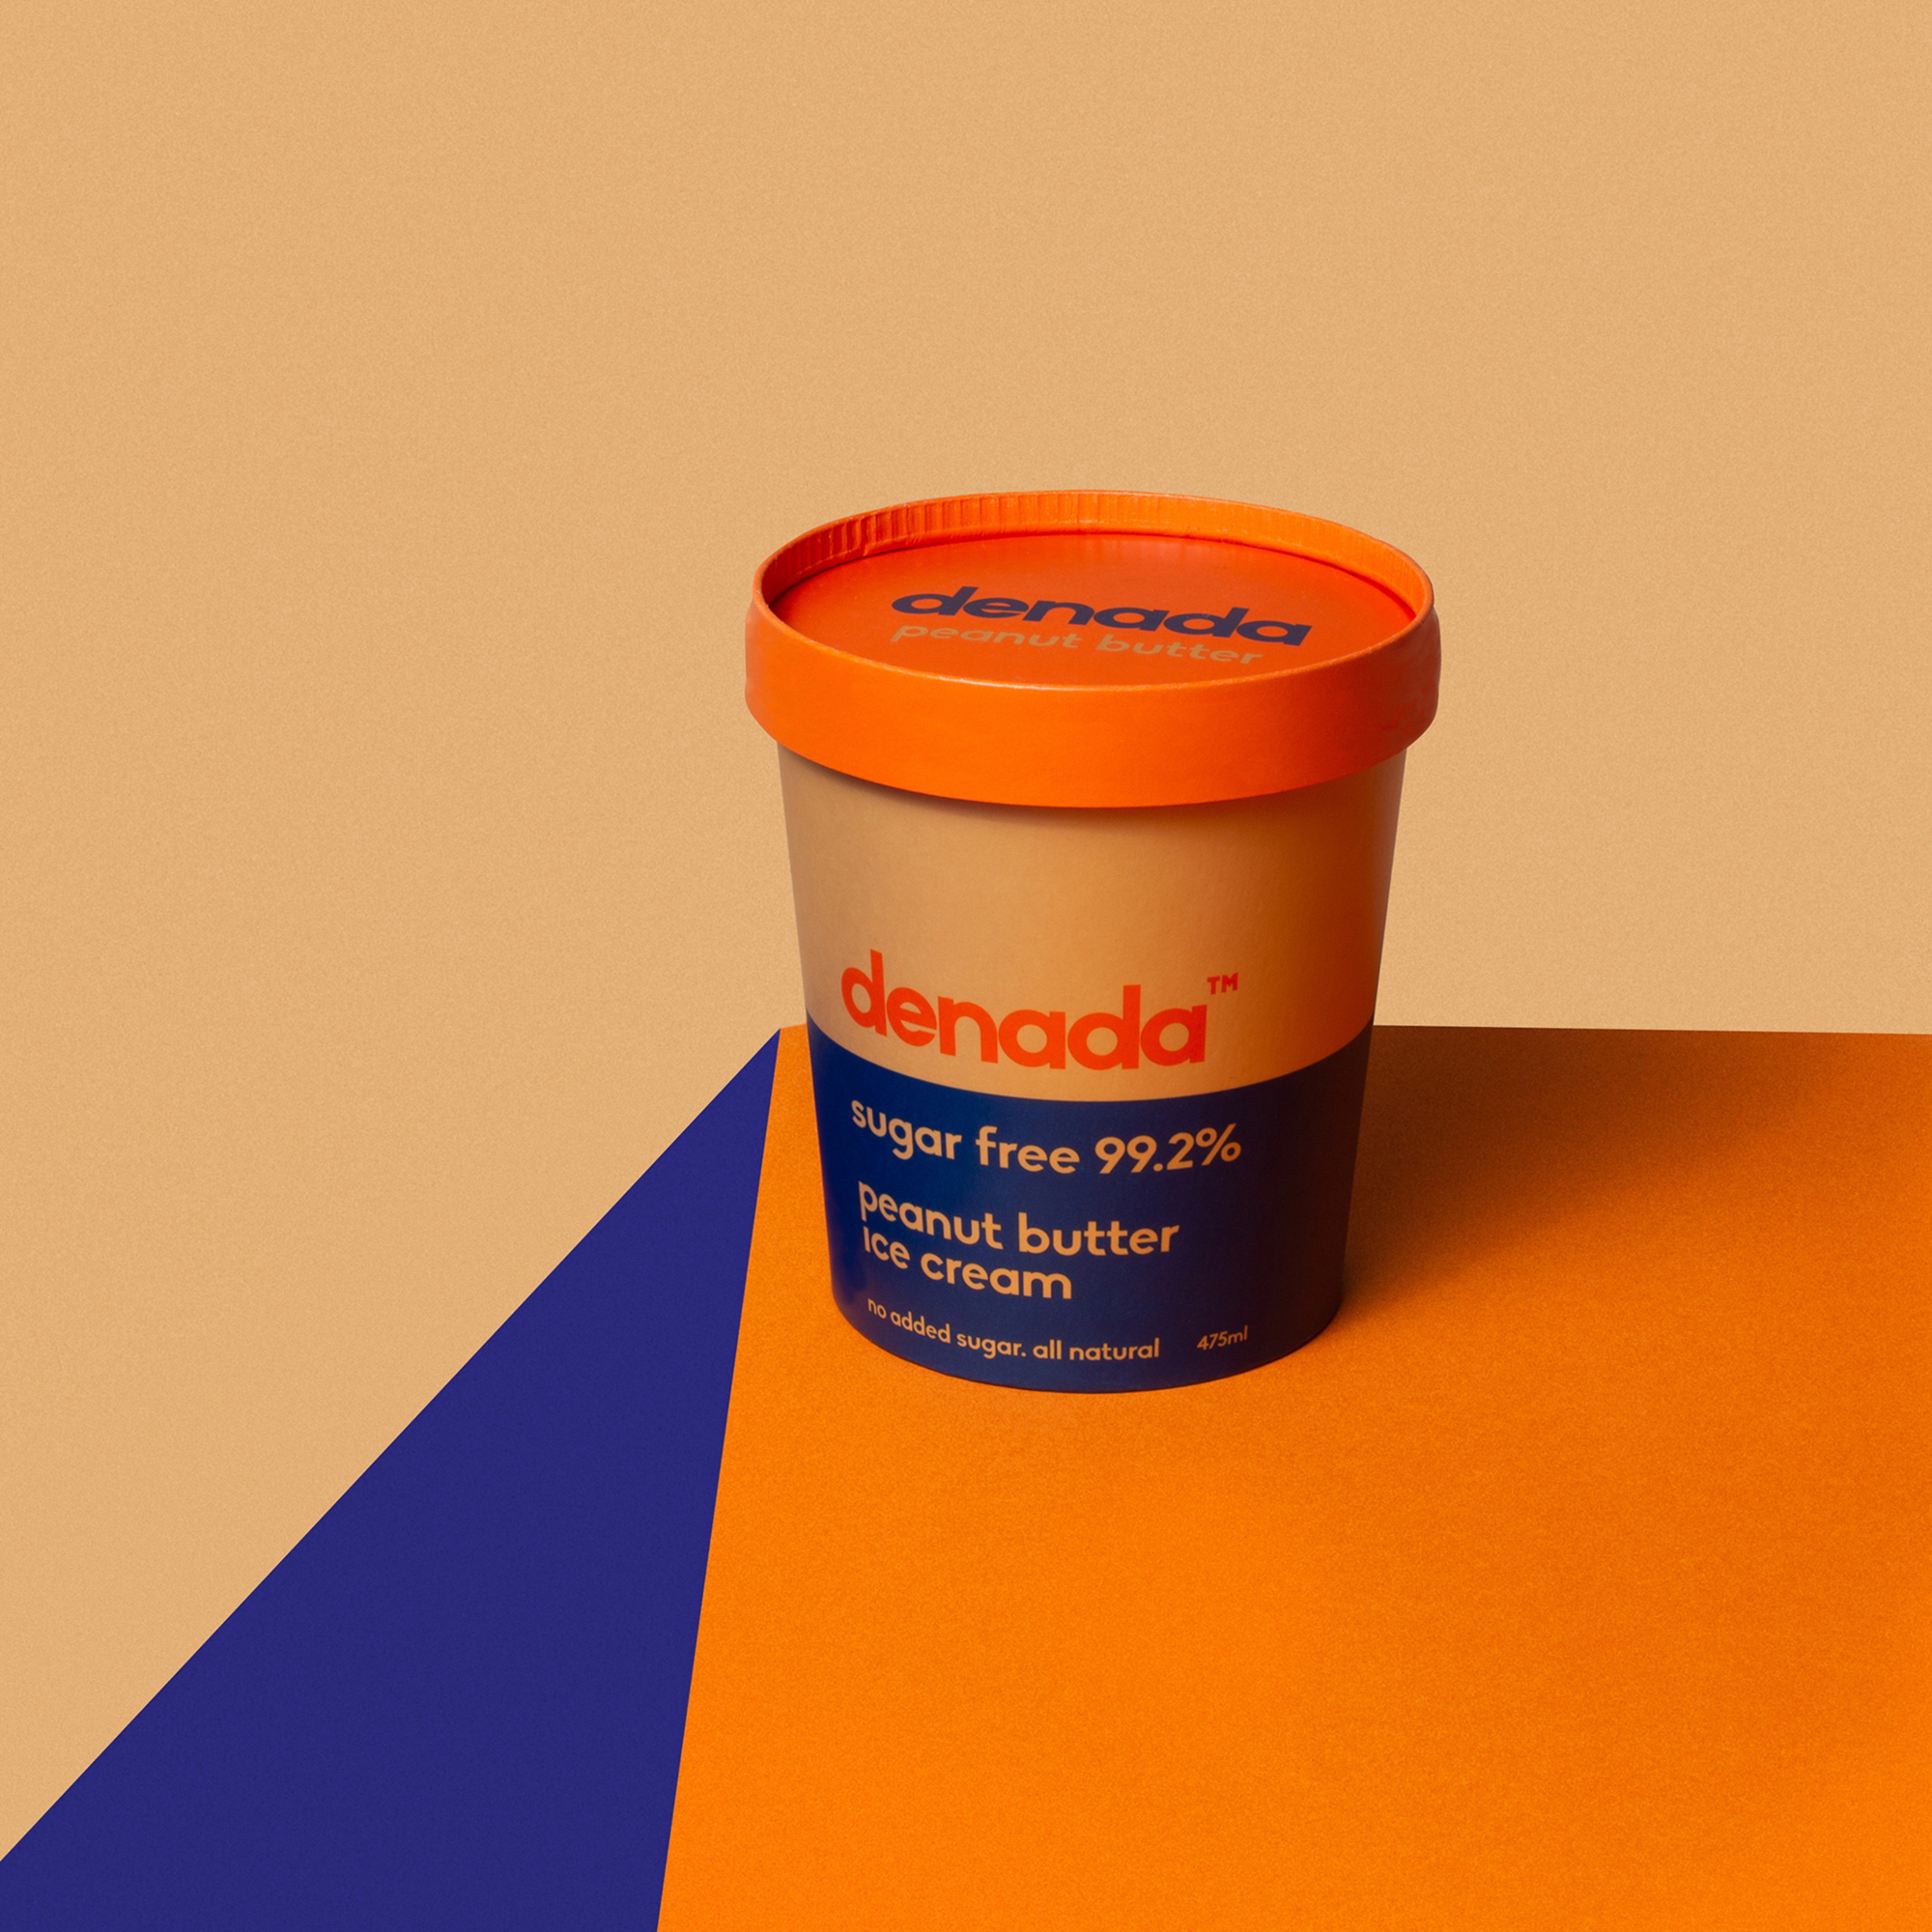 Jo Cutri Studio Create Brand Identity and Packaging Design for Denada ...